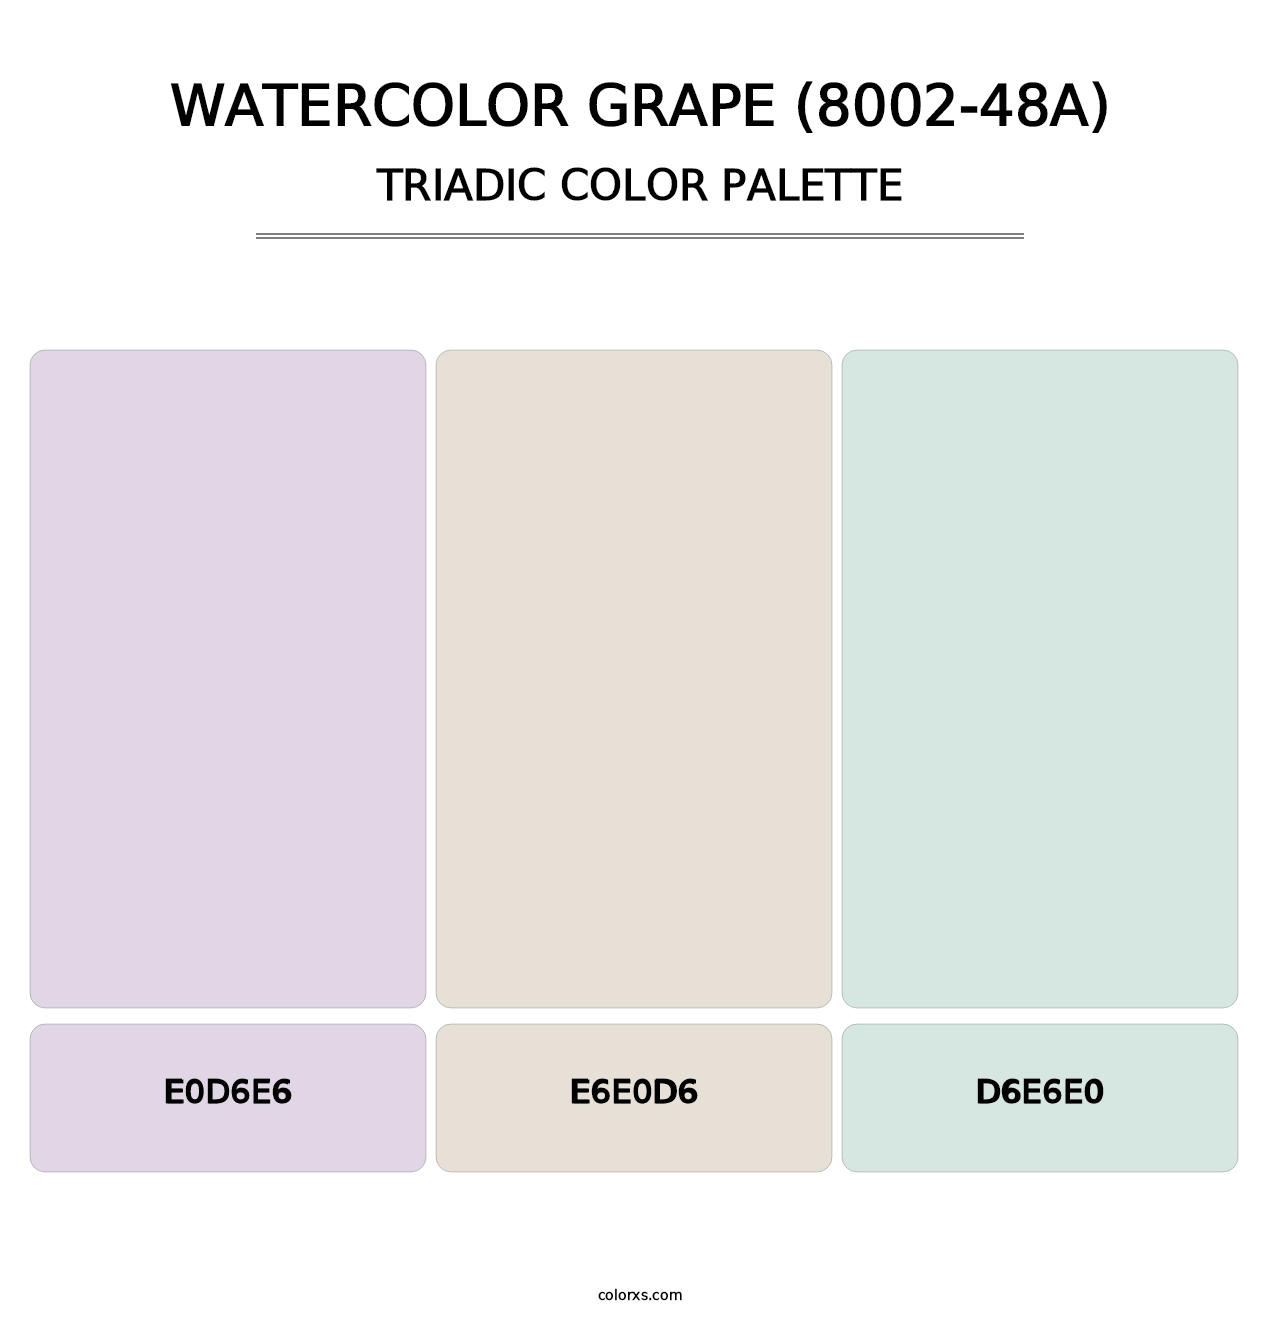 Watercolor Grape (8002-48A) - Triadic Color Palette